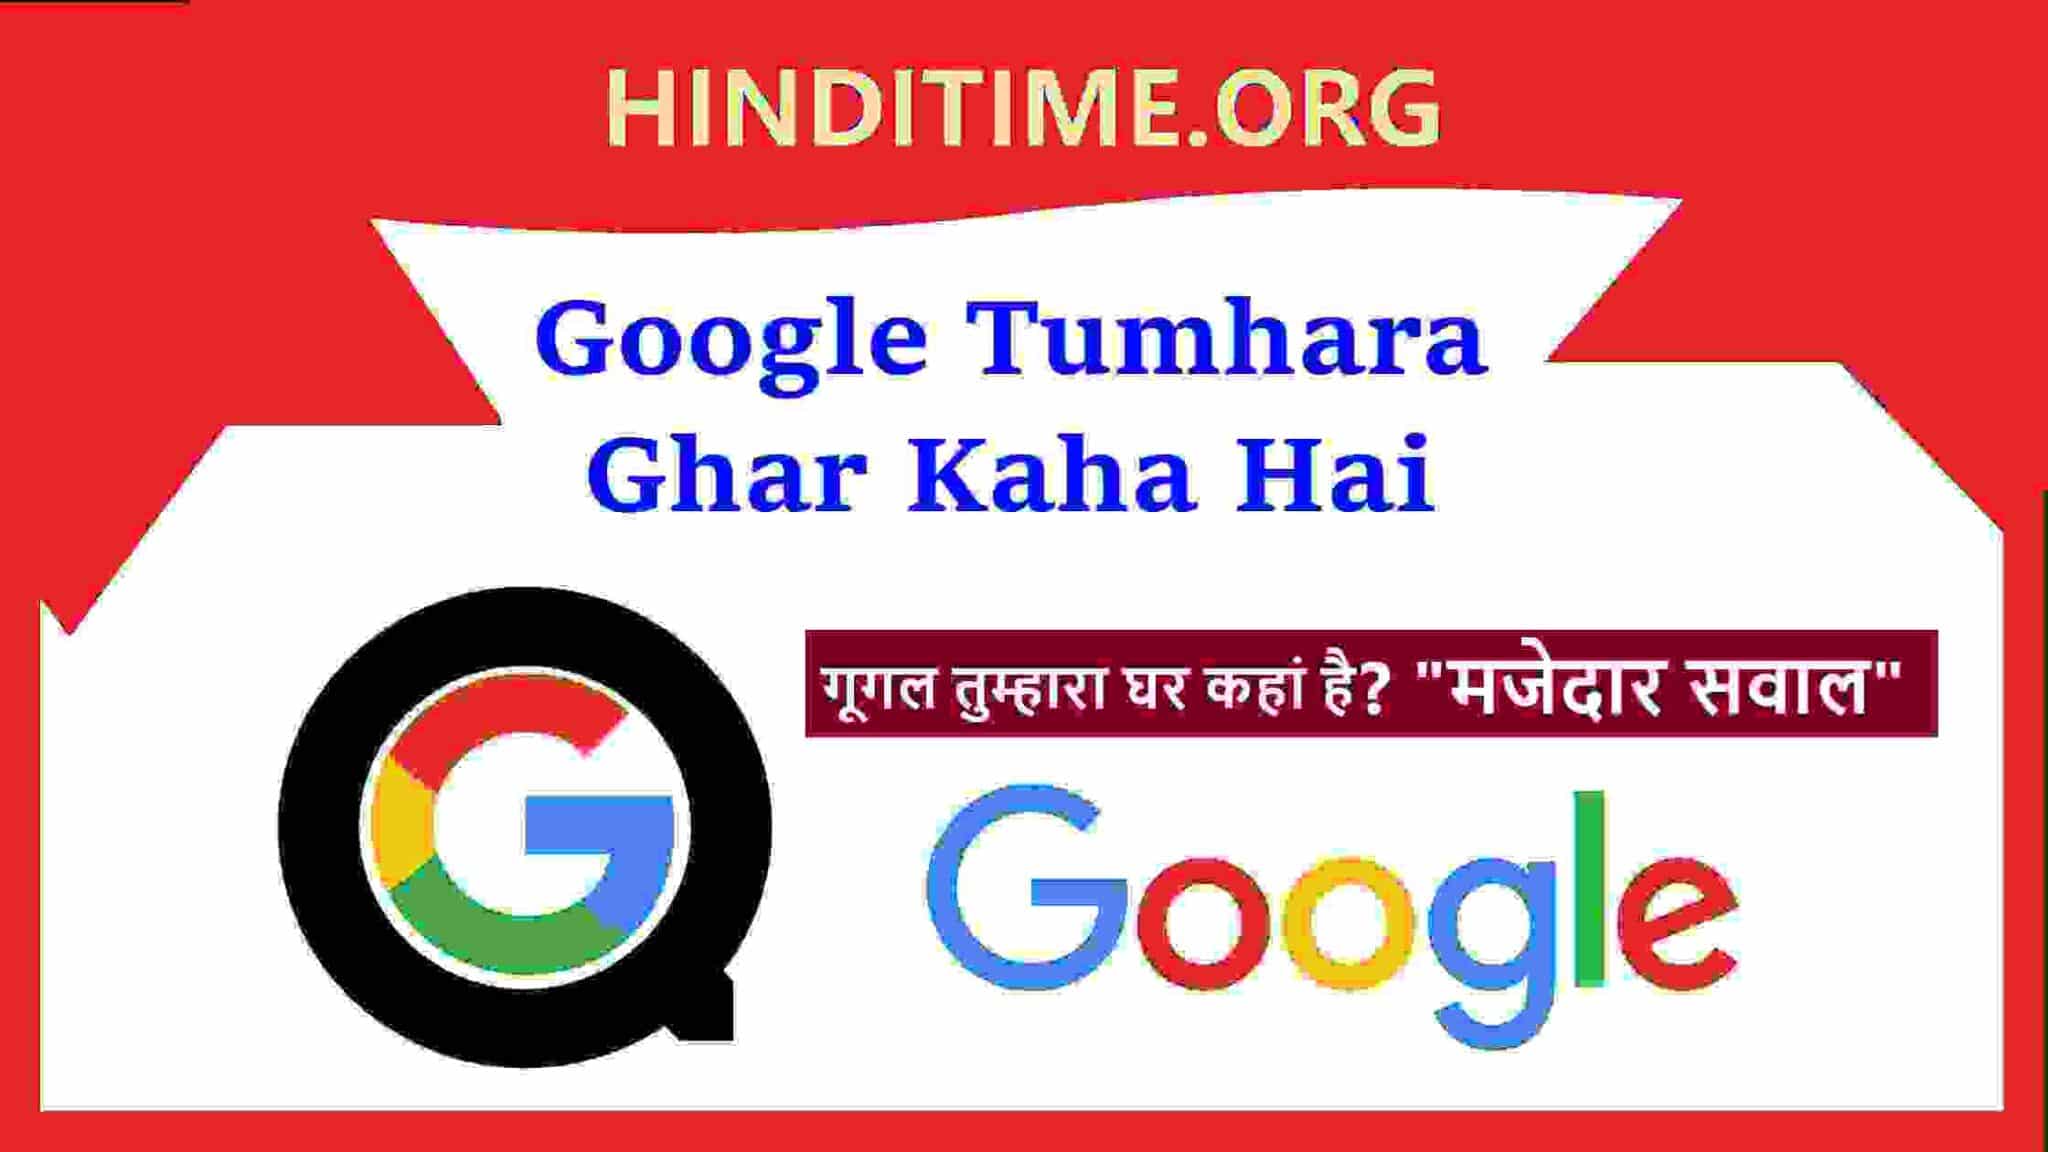 Google Tumhara Ghar Kaha Hai - गूगल तुम्हारा घर कहां है 2022